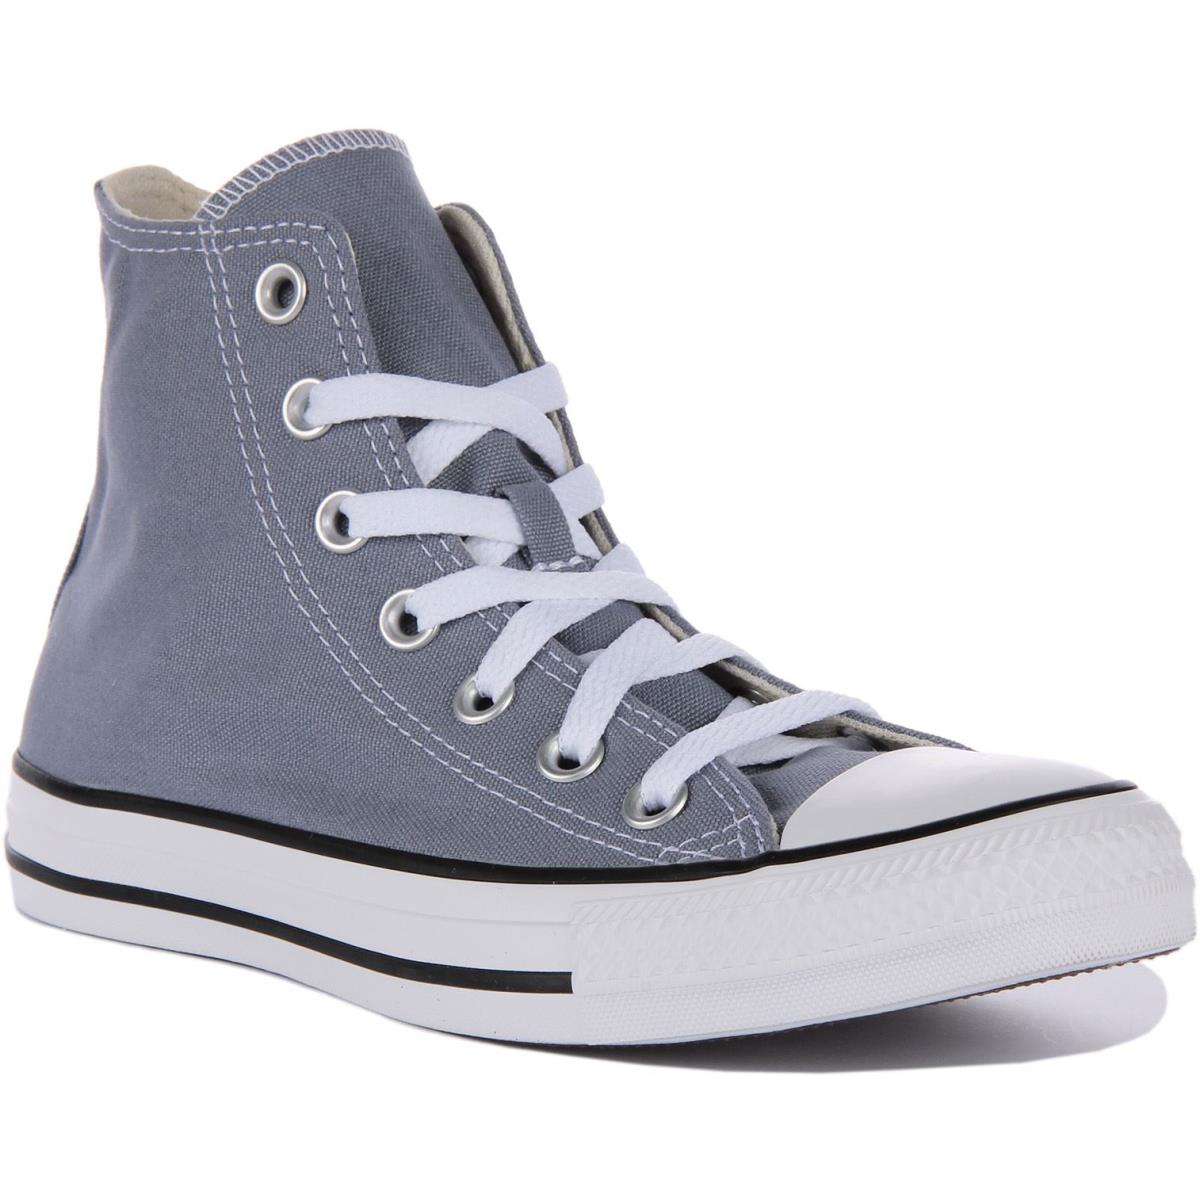 Converse A02786C Lunar Seasonal Color Hi Lace Up Sneaker Grey Mens US 7 - 13 GREY